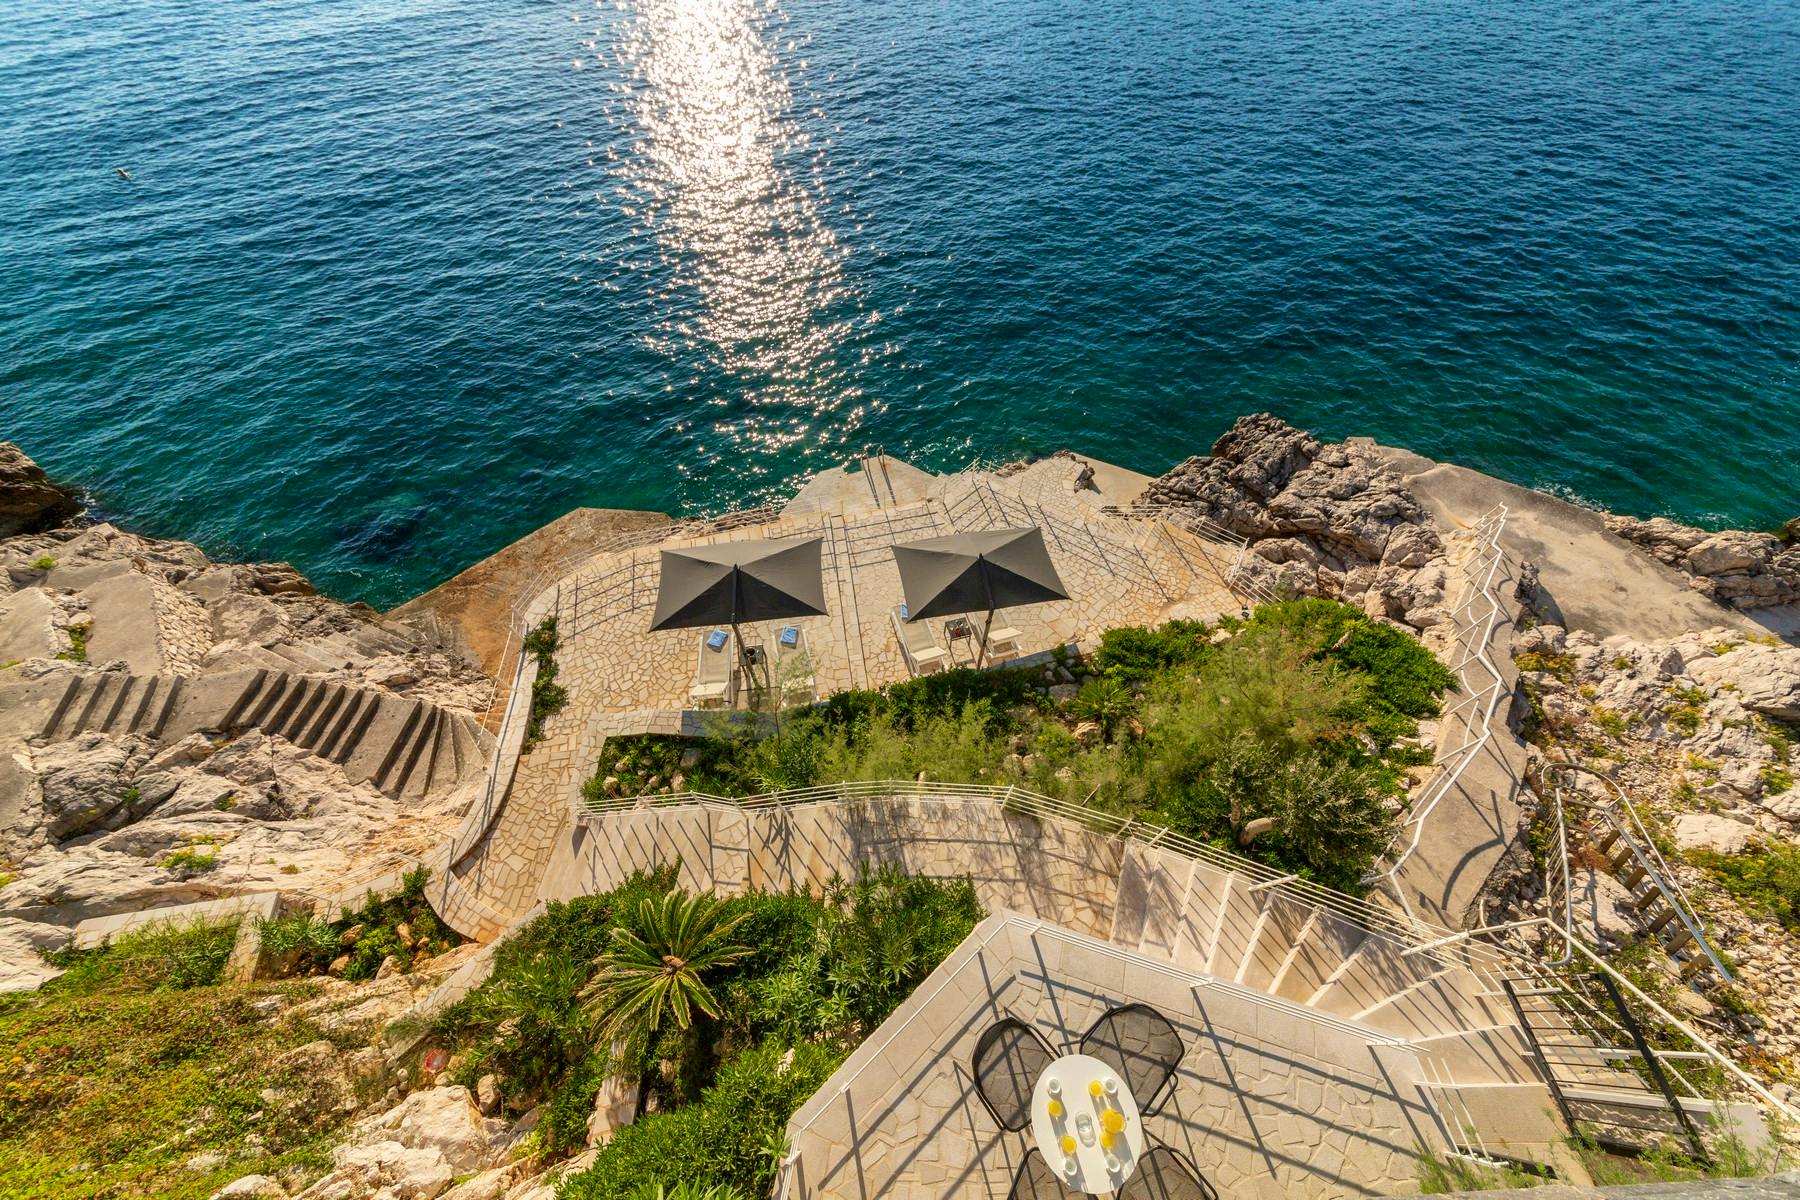 Vanjske terase protežu se sve do Jadranskog mora